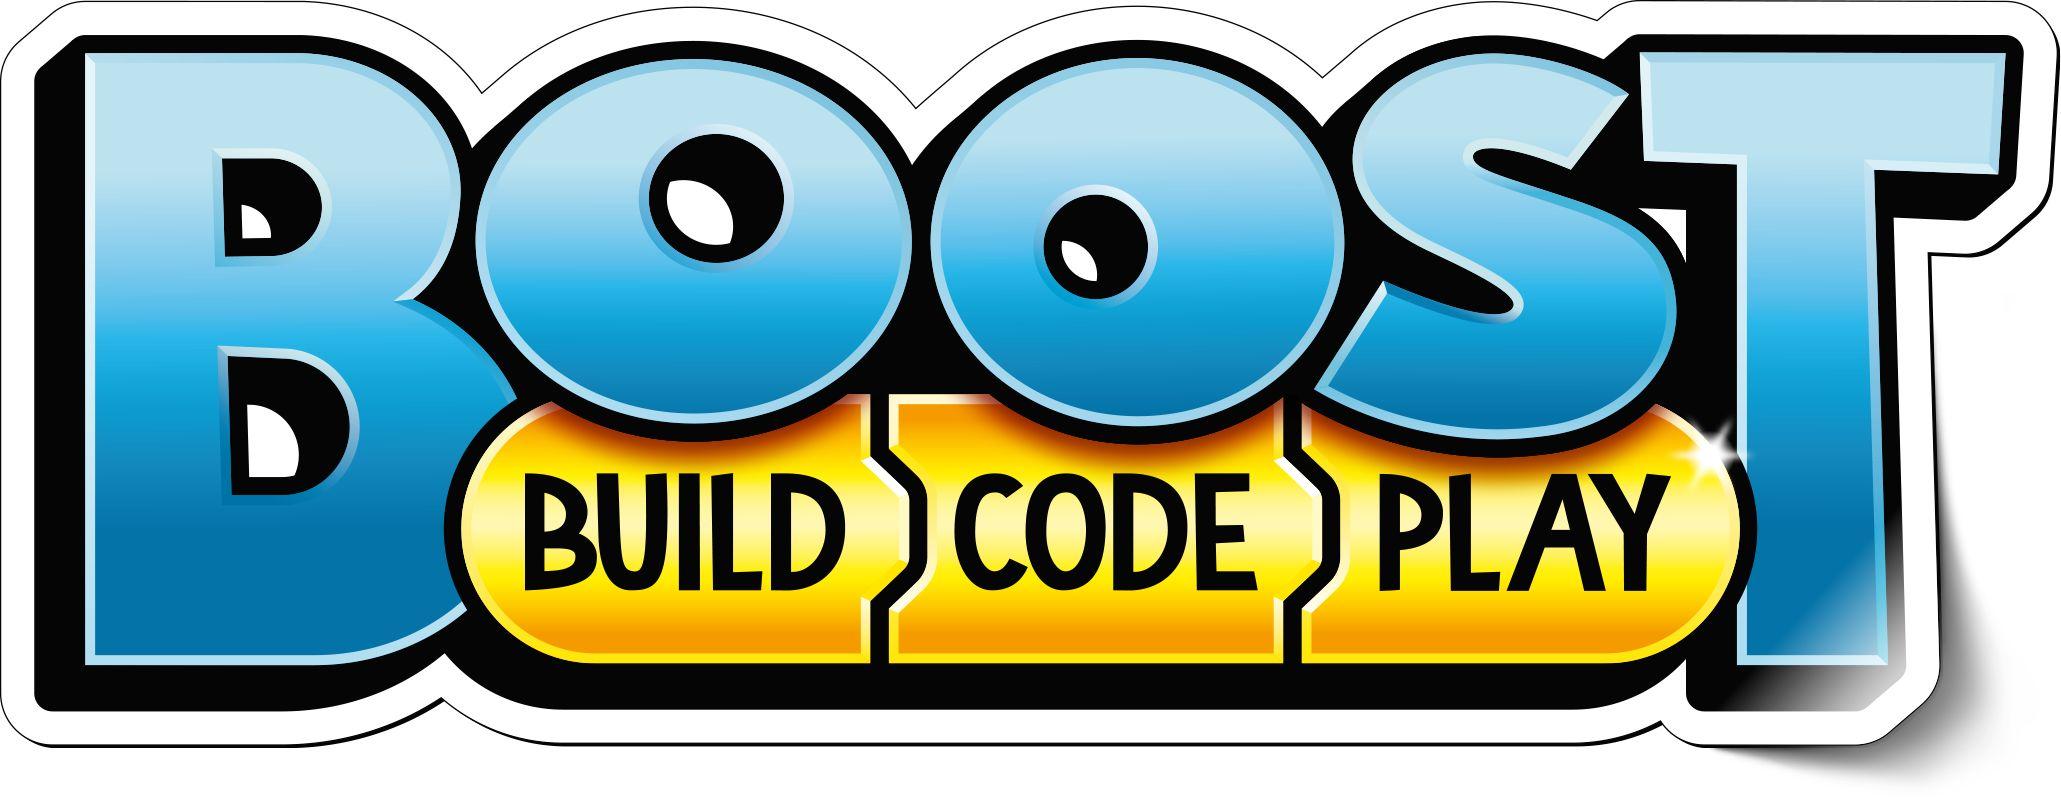 Boost Logo - BOOST Creative Toolbox - 17101 | BOOST | LEGO Shop